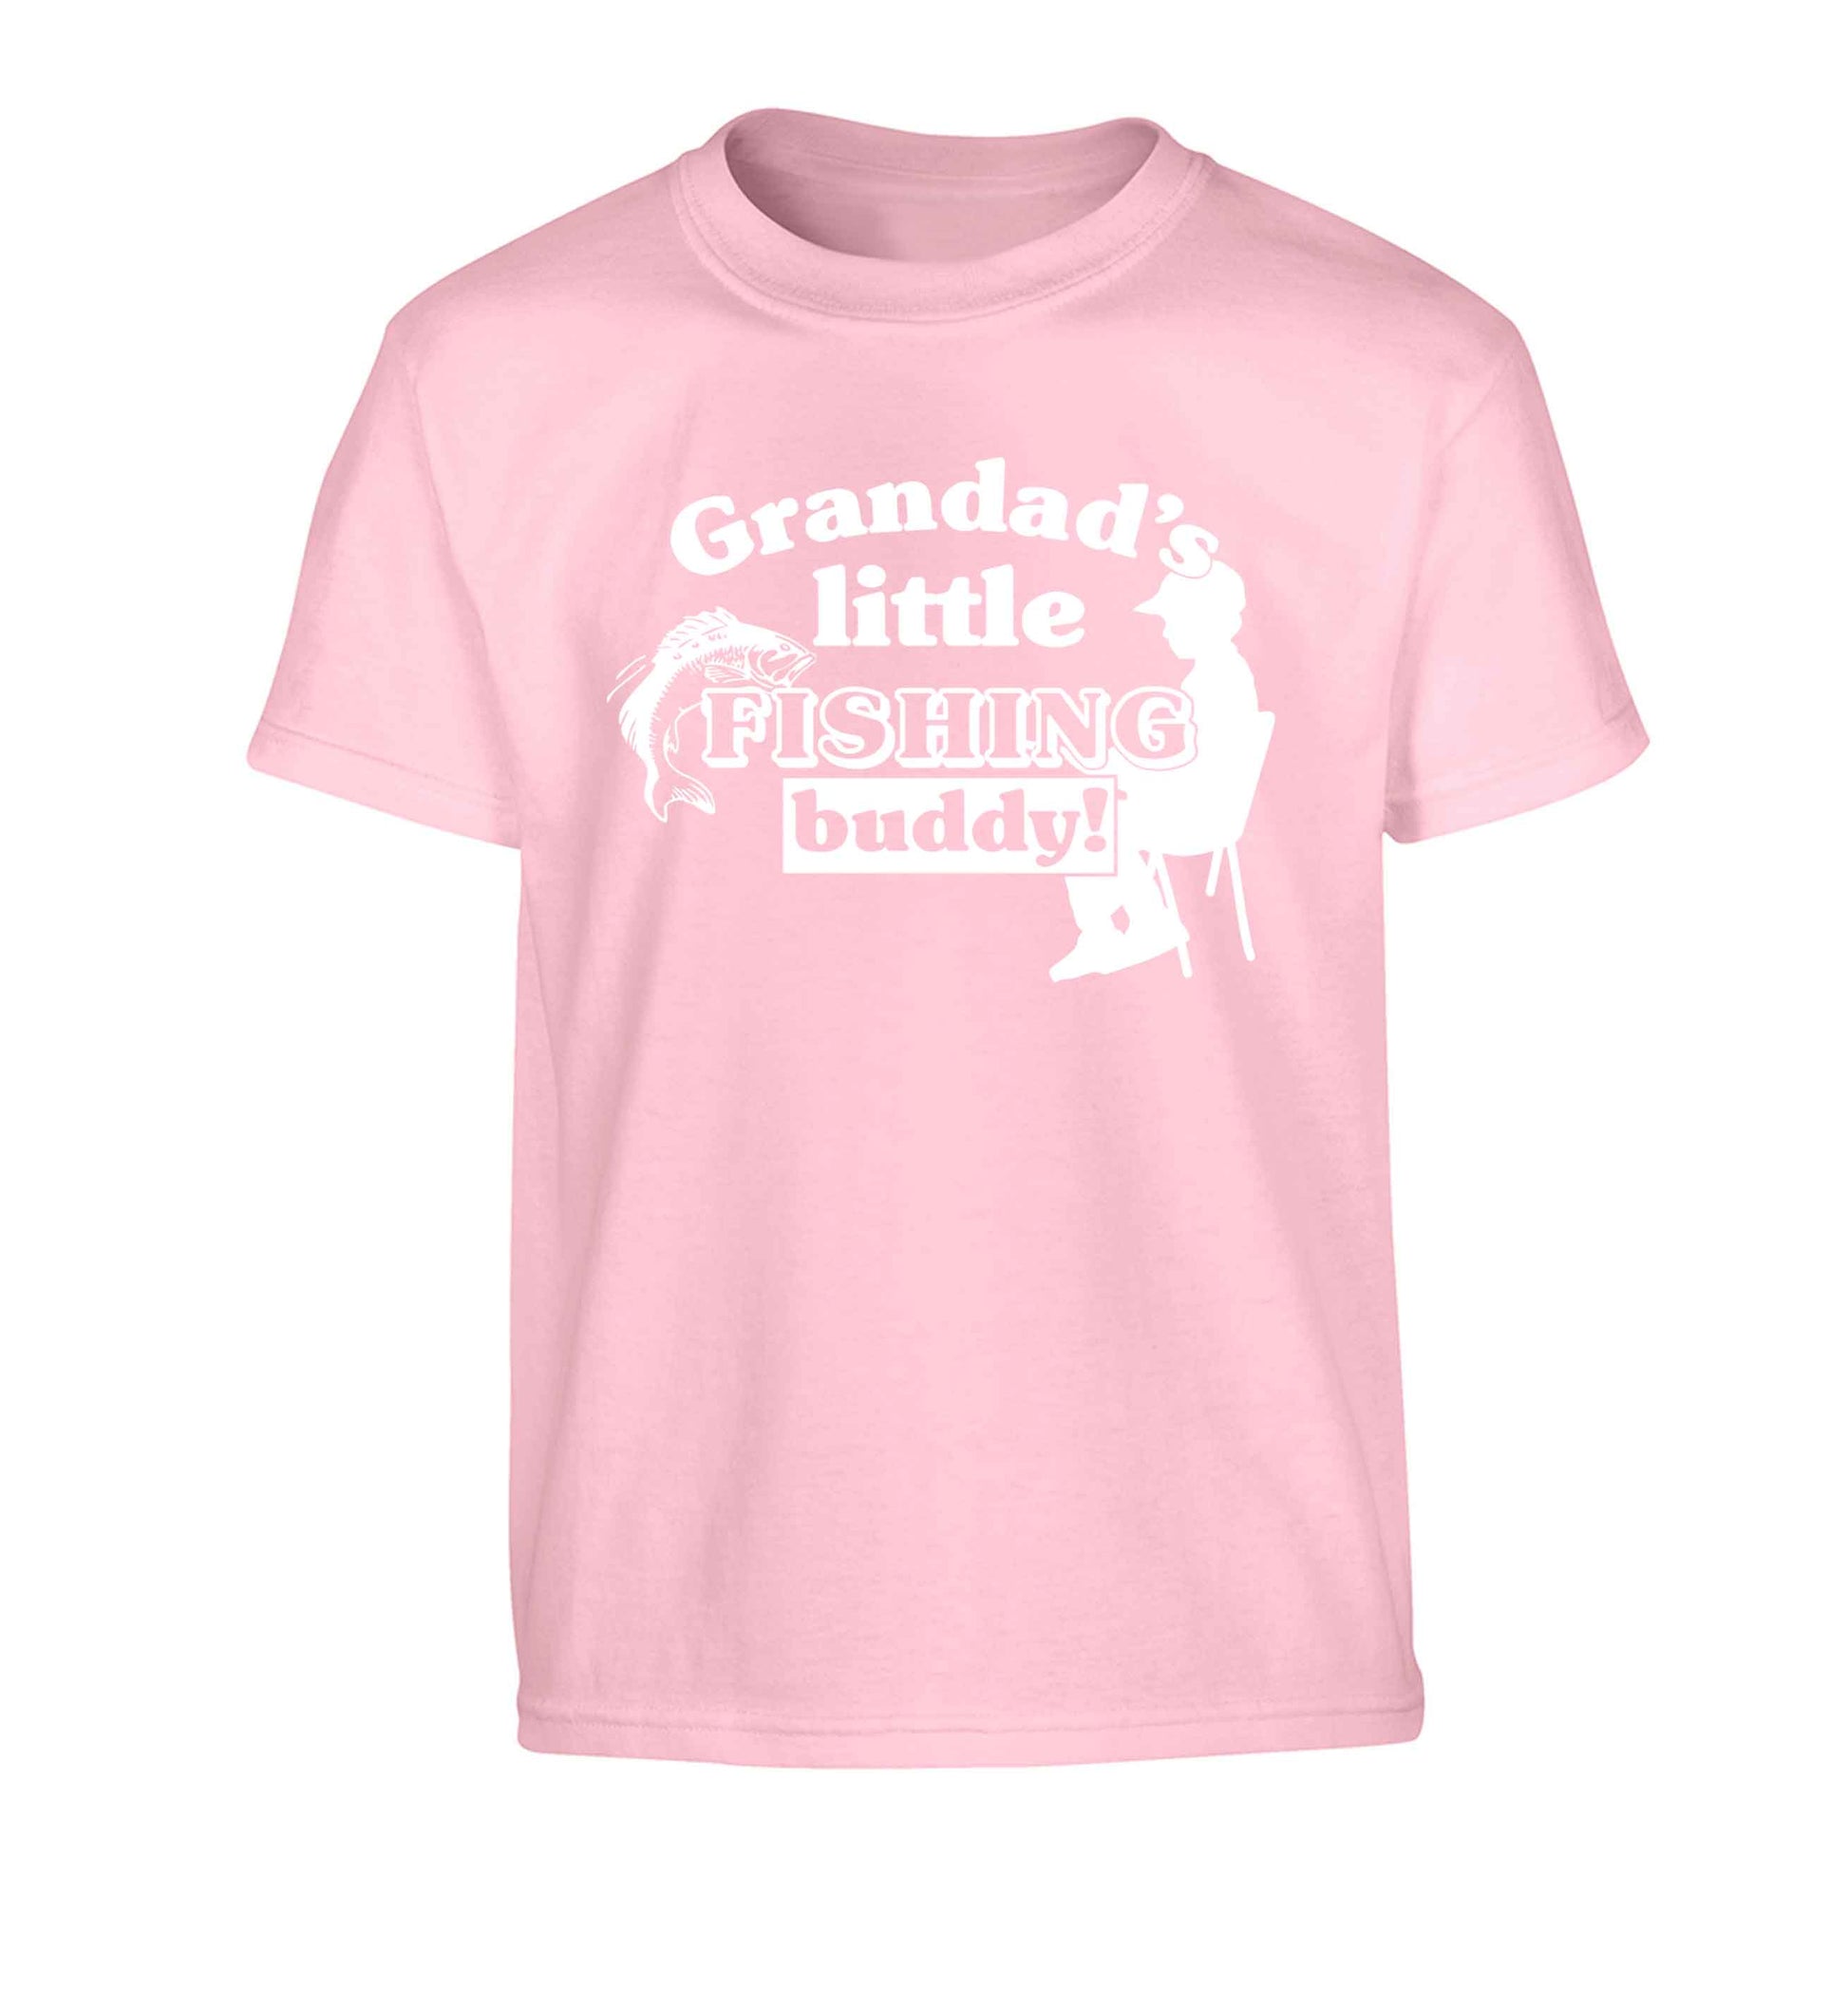 Grandad's little fishing buddy! Children's light pink Tshirt 12-13 Years